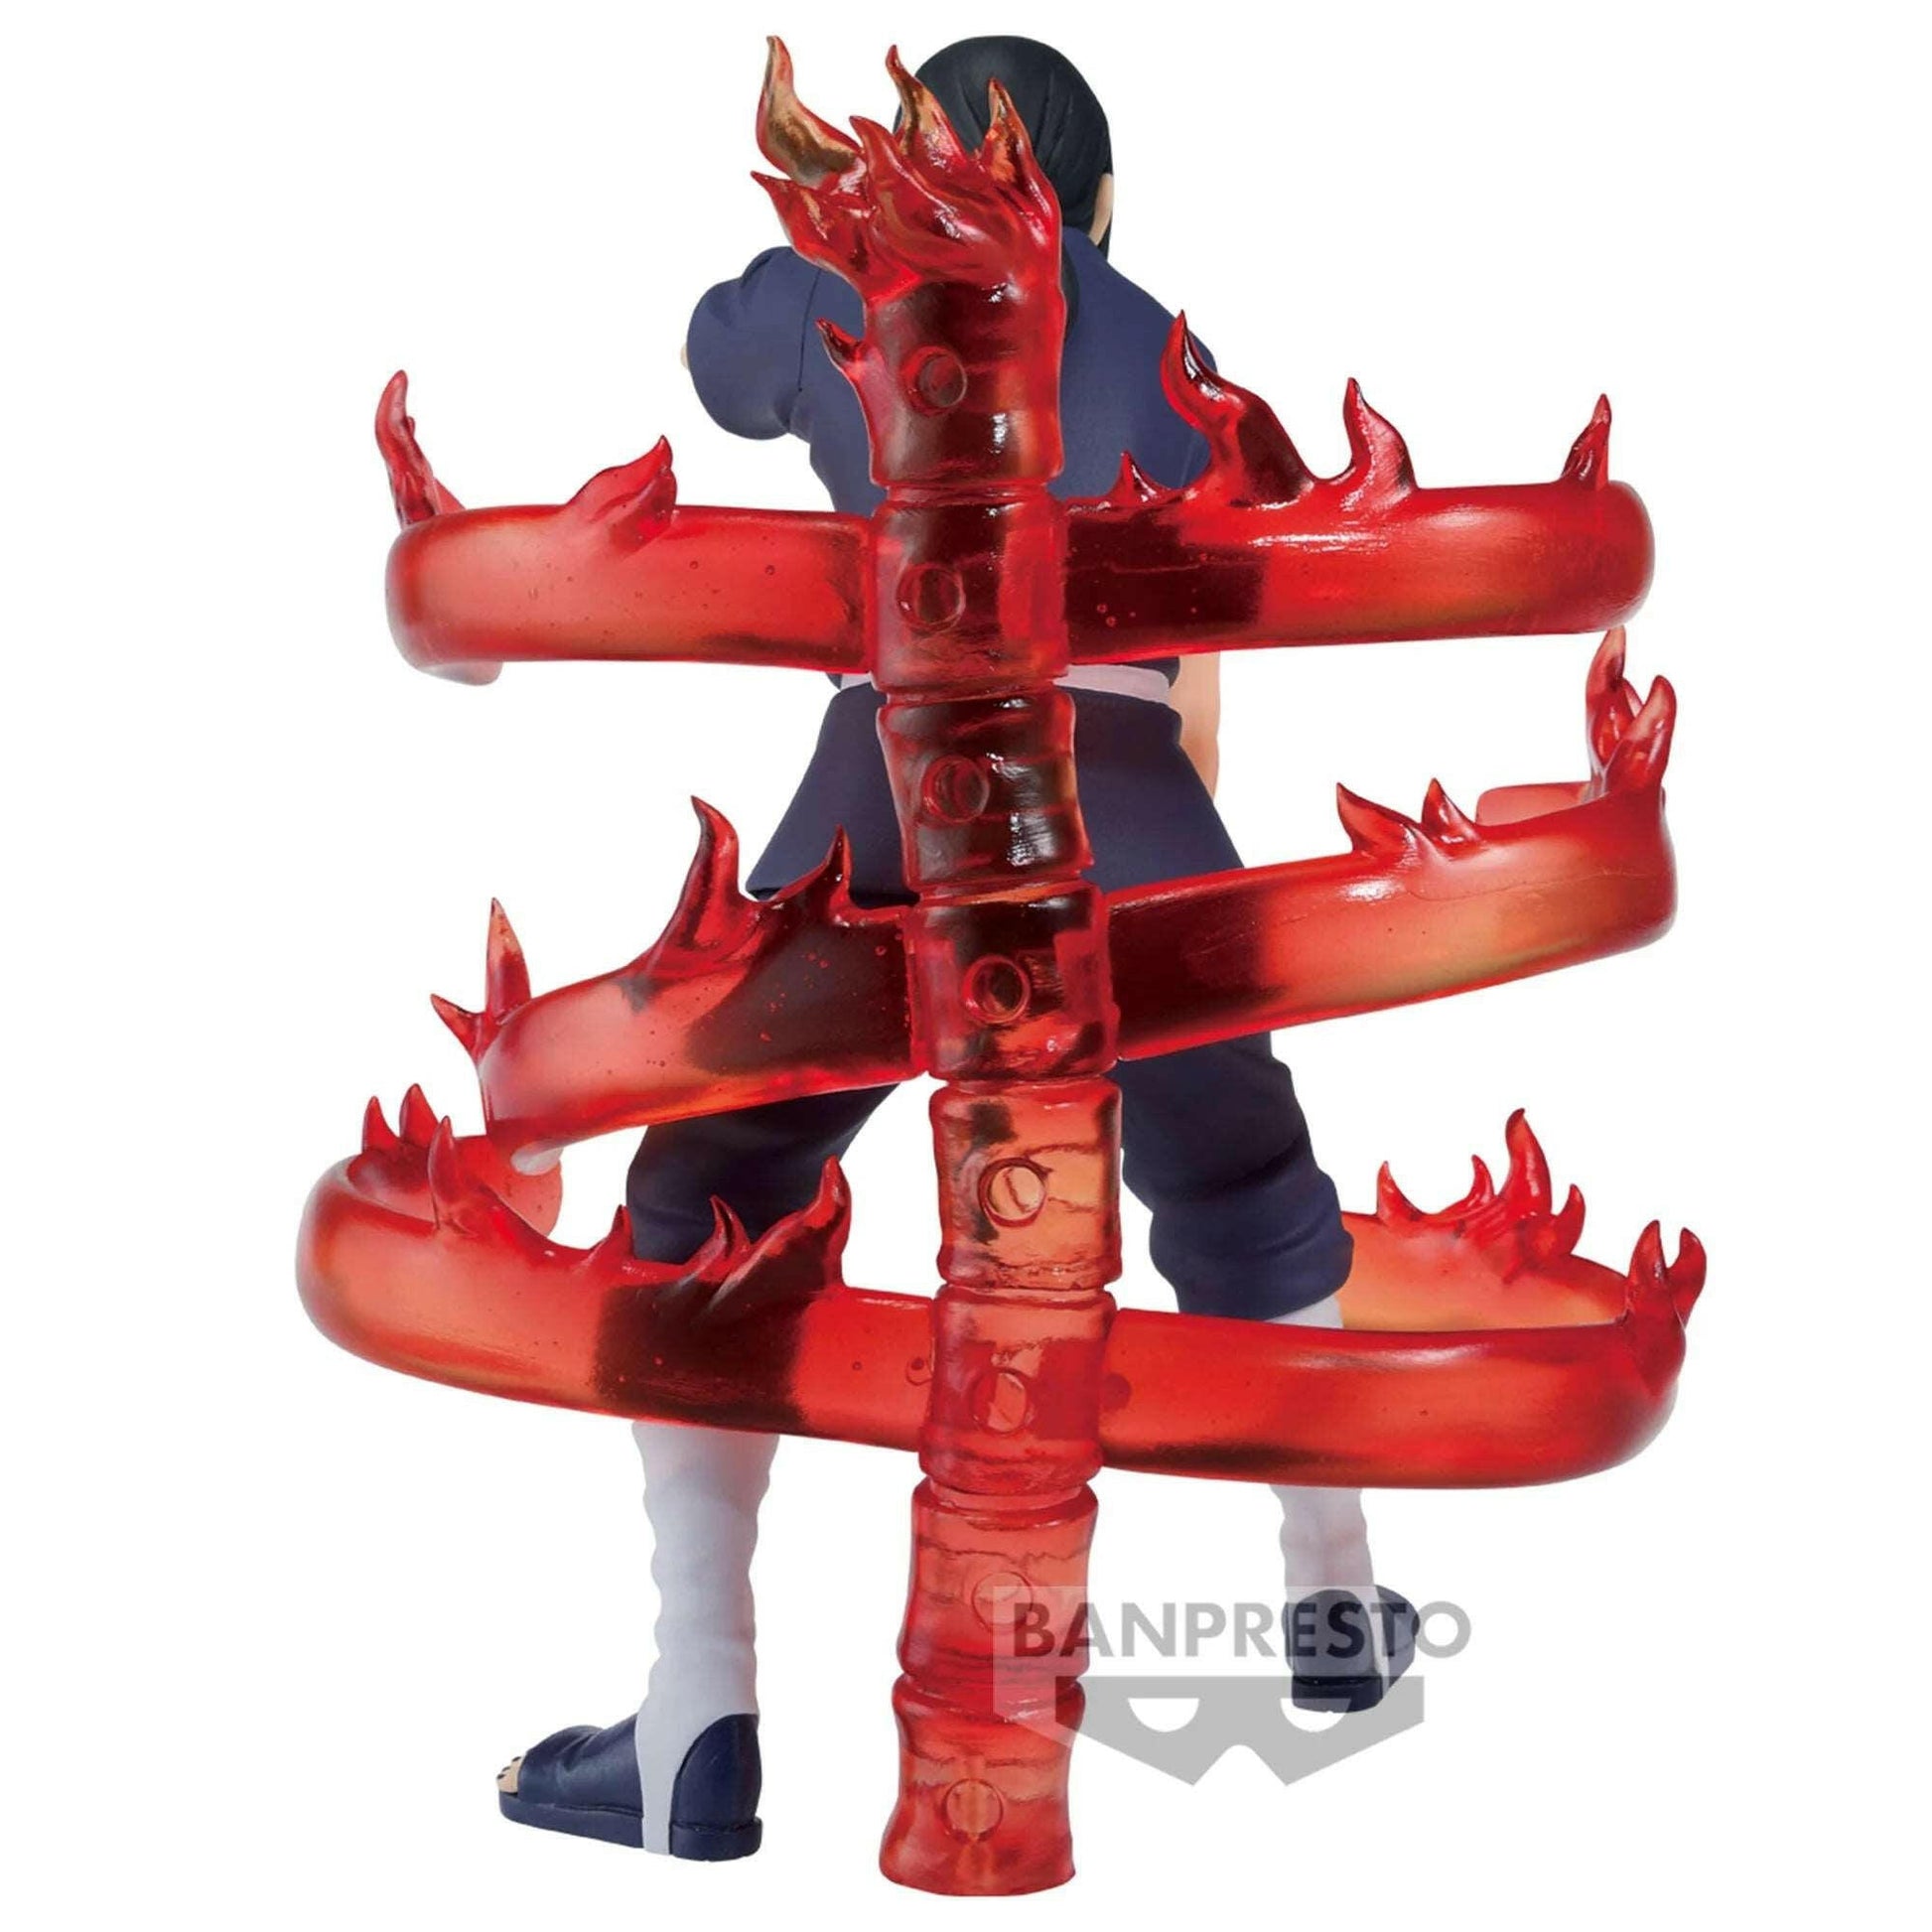 Banpresto Naruto Shippuden Effectreme Itachi Uchiha PVC Statue 14cm